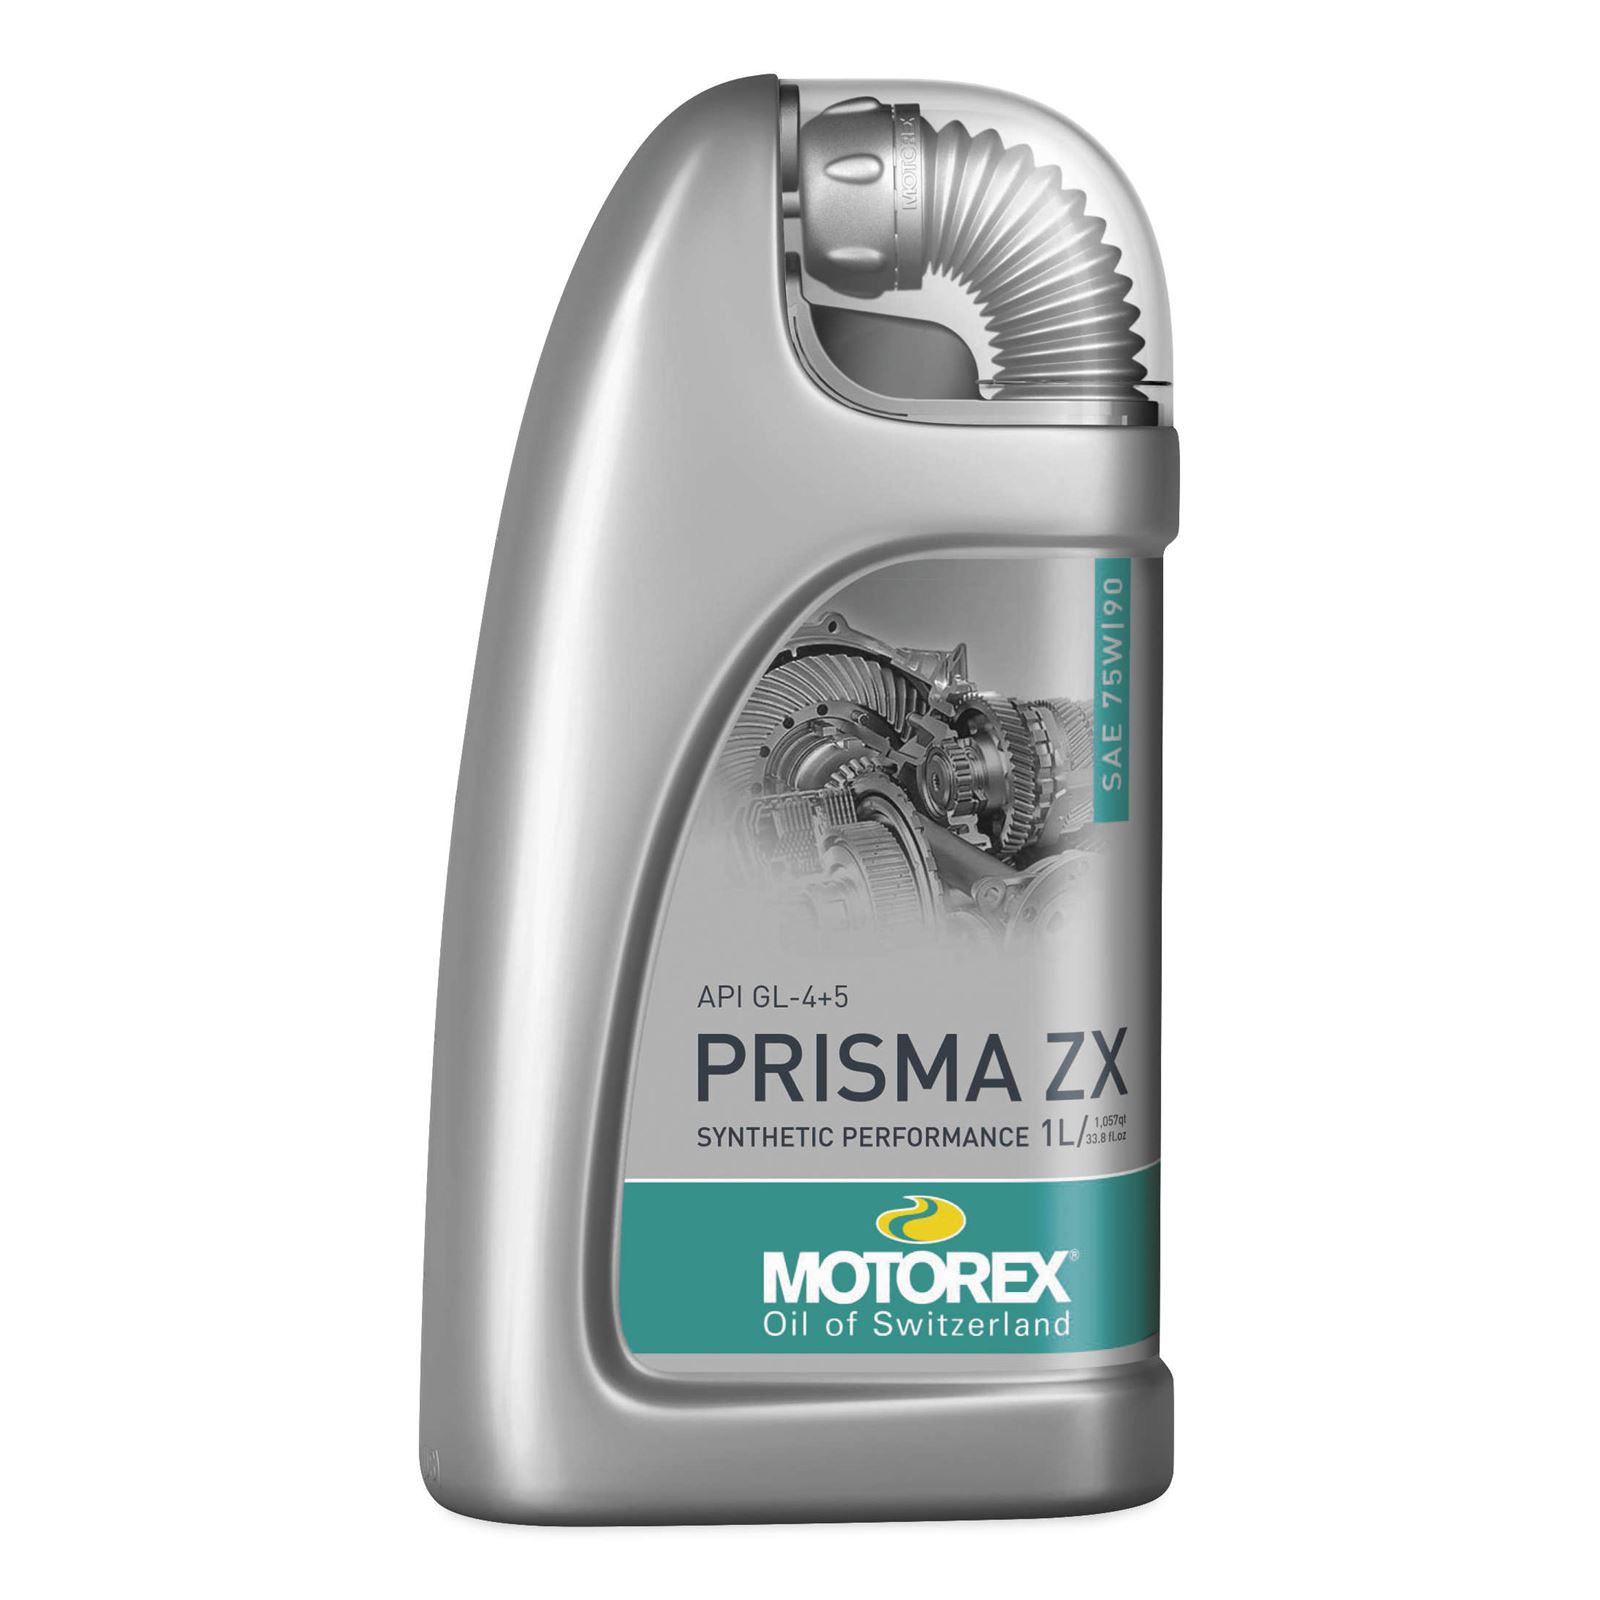 Motorex Prisma ZX Oil